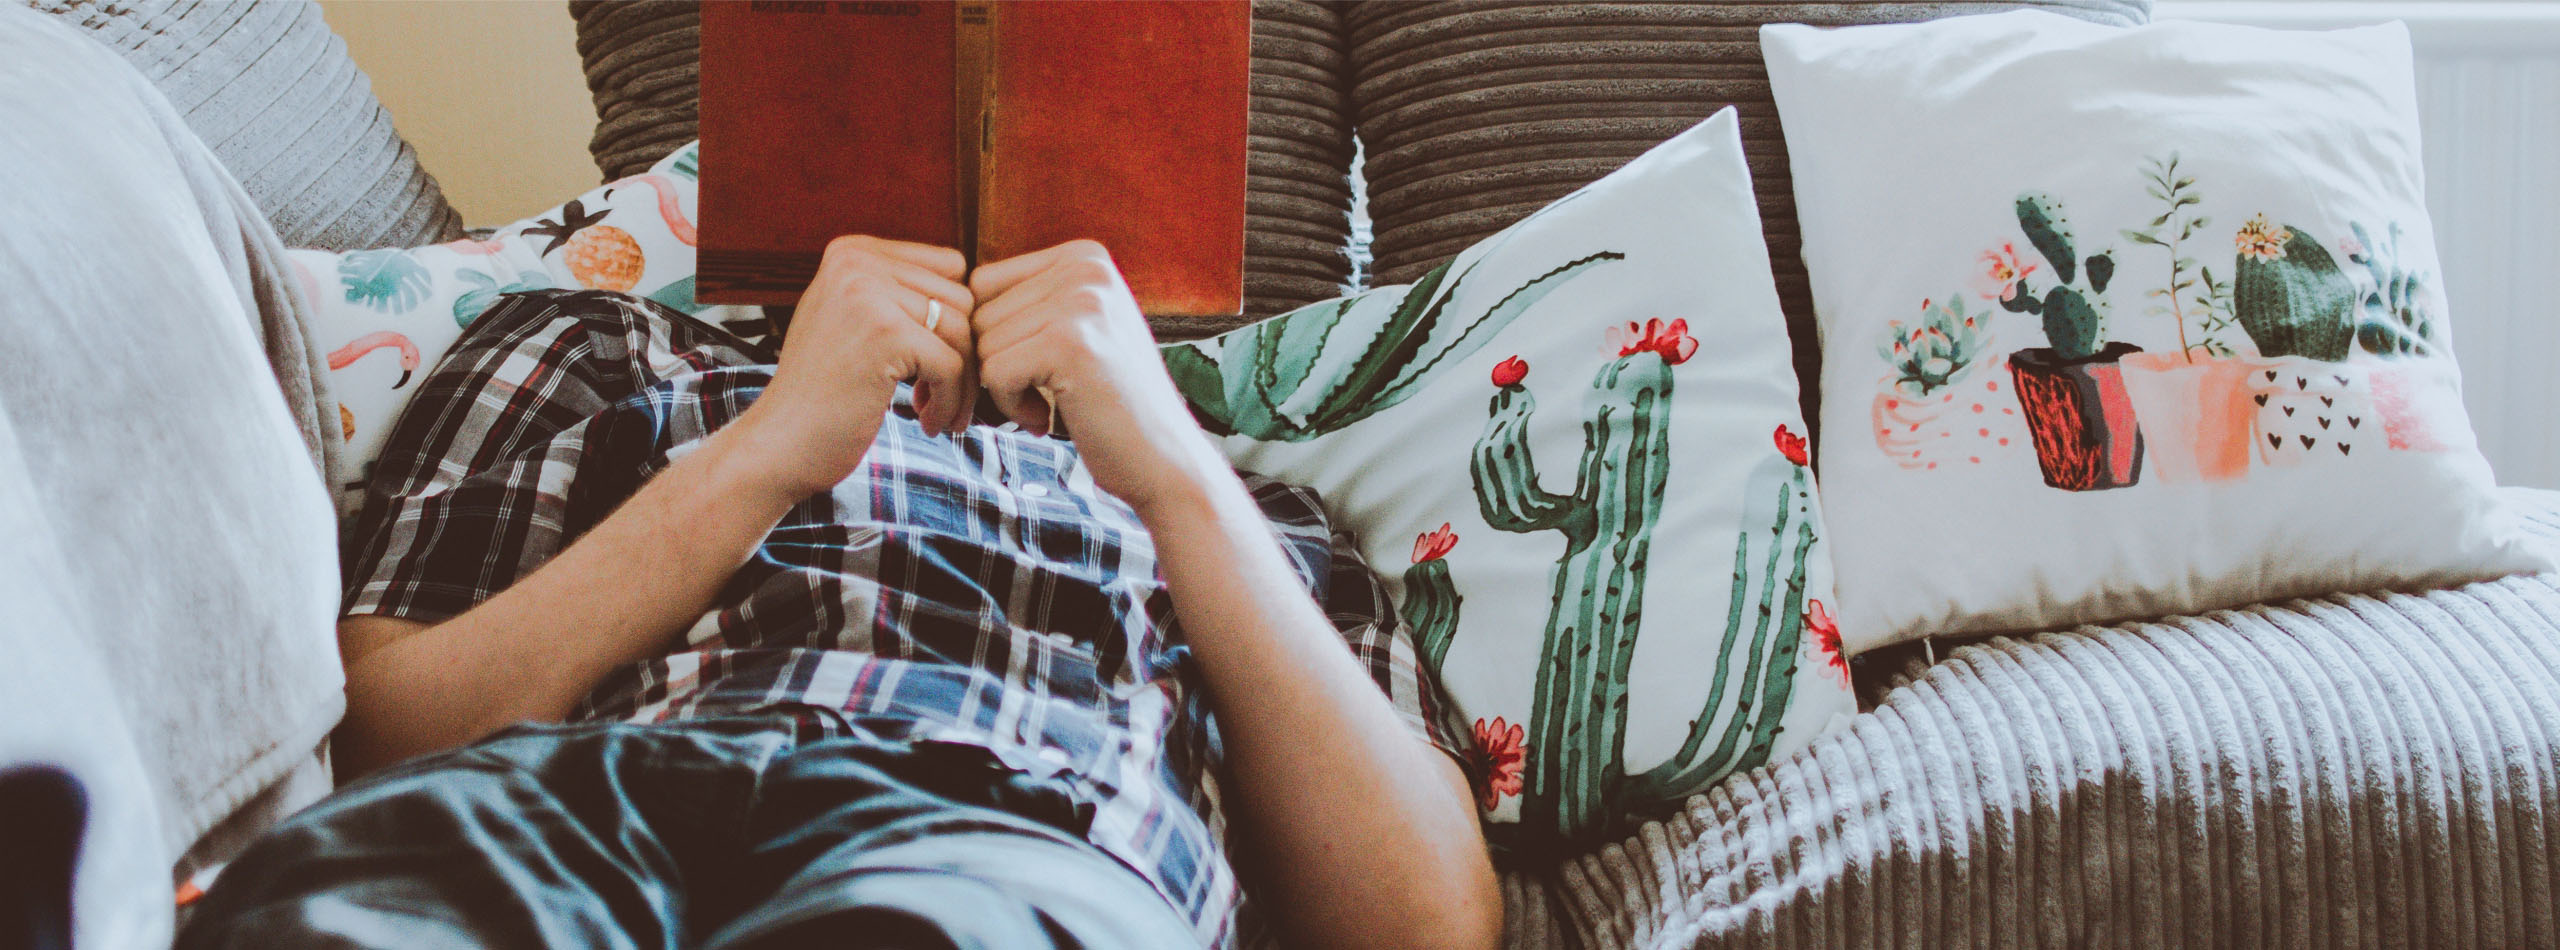 Man reading next to custom printed cotton linen canvas pillows